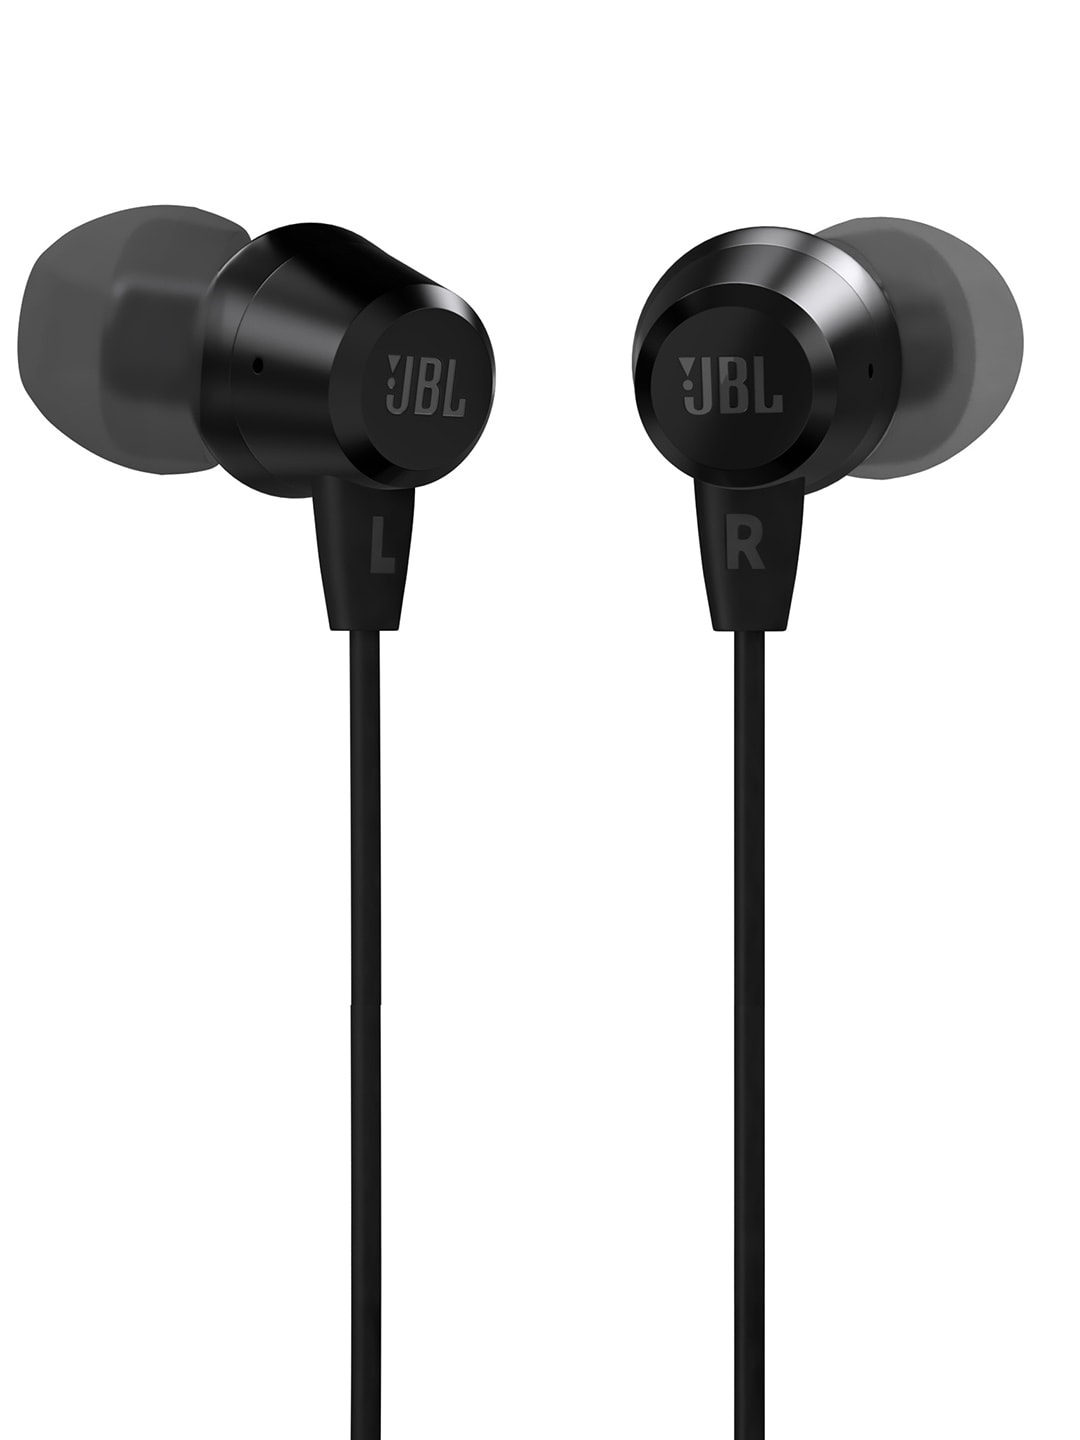 JBL Black C50HI M in-Ear Headphones with Mic JBLC50HIBLK Price in India